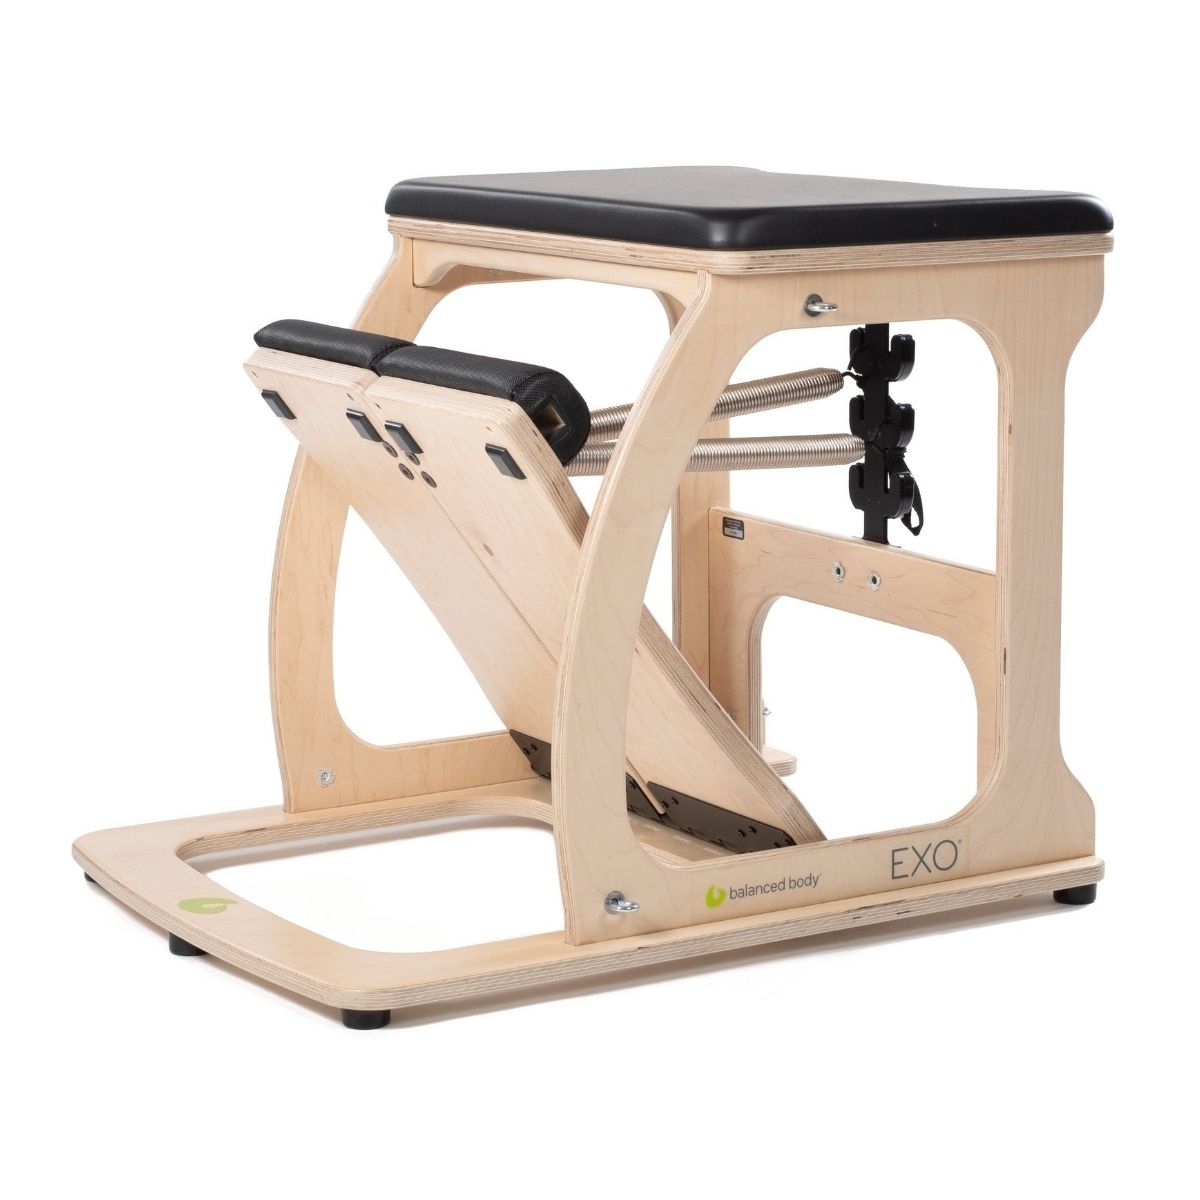 Sedia Pilates Exo Chair Balanced Body 